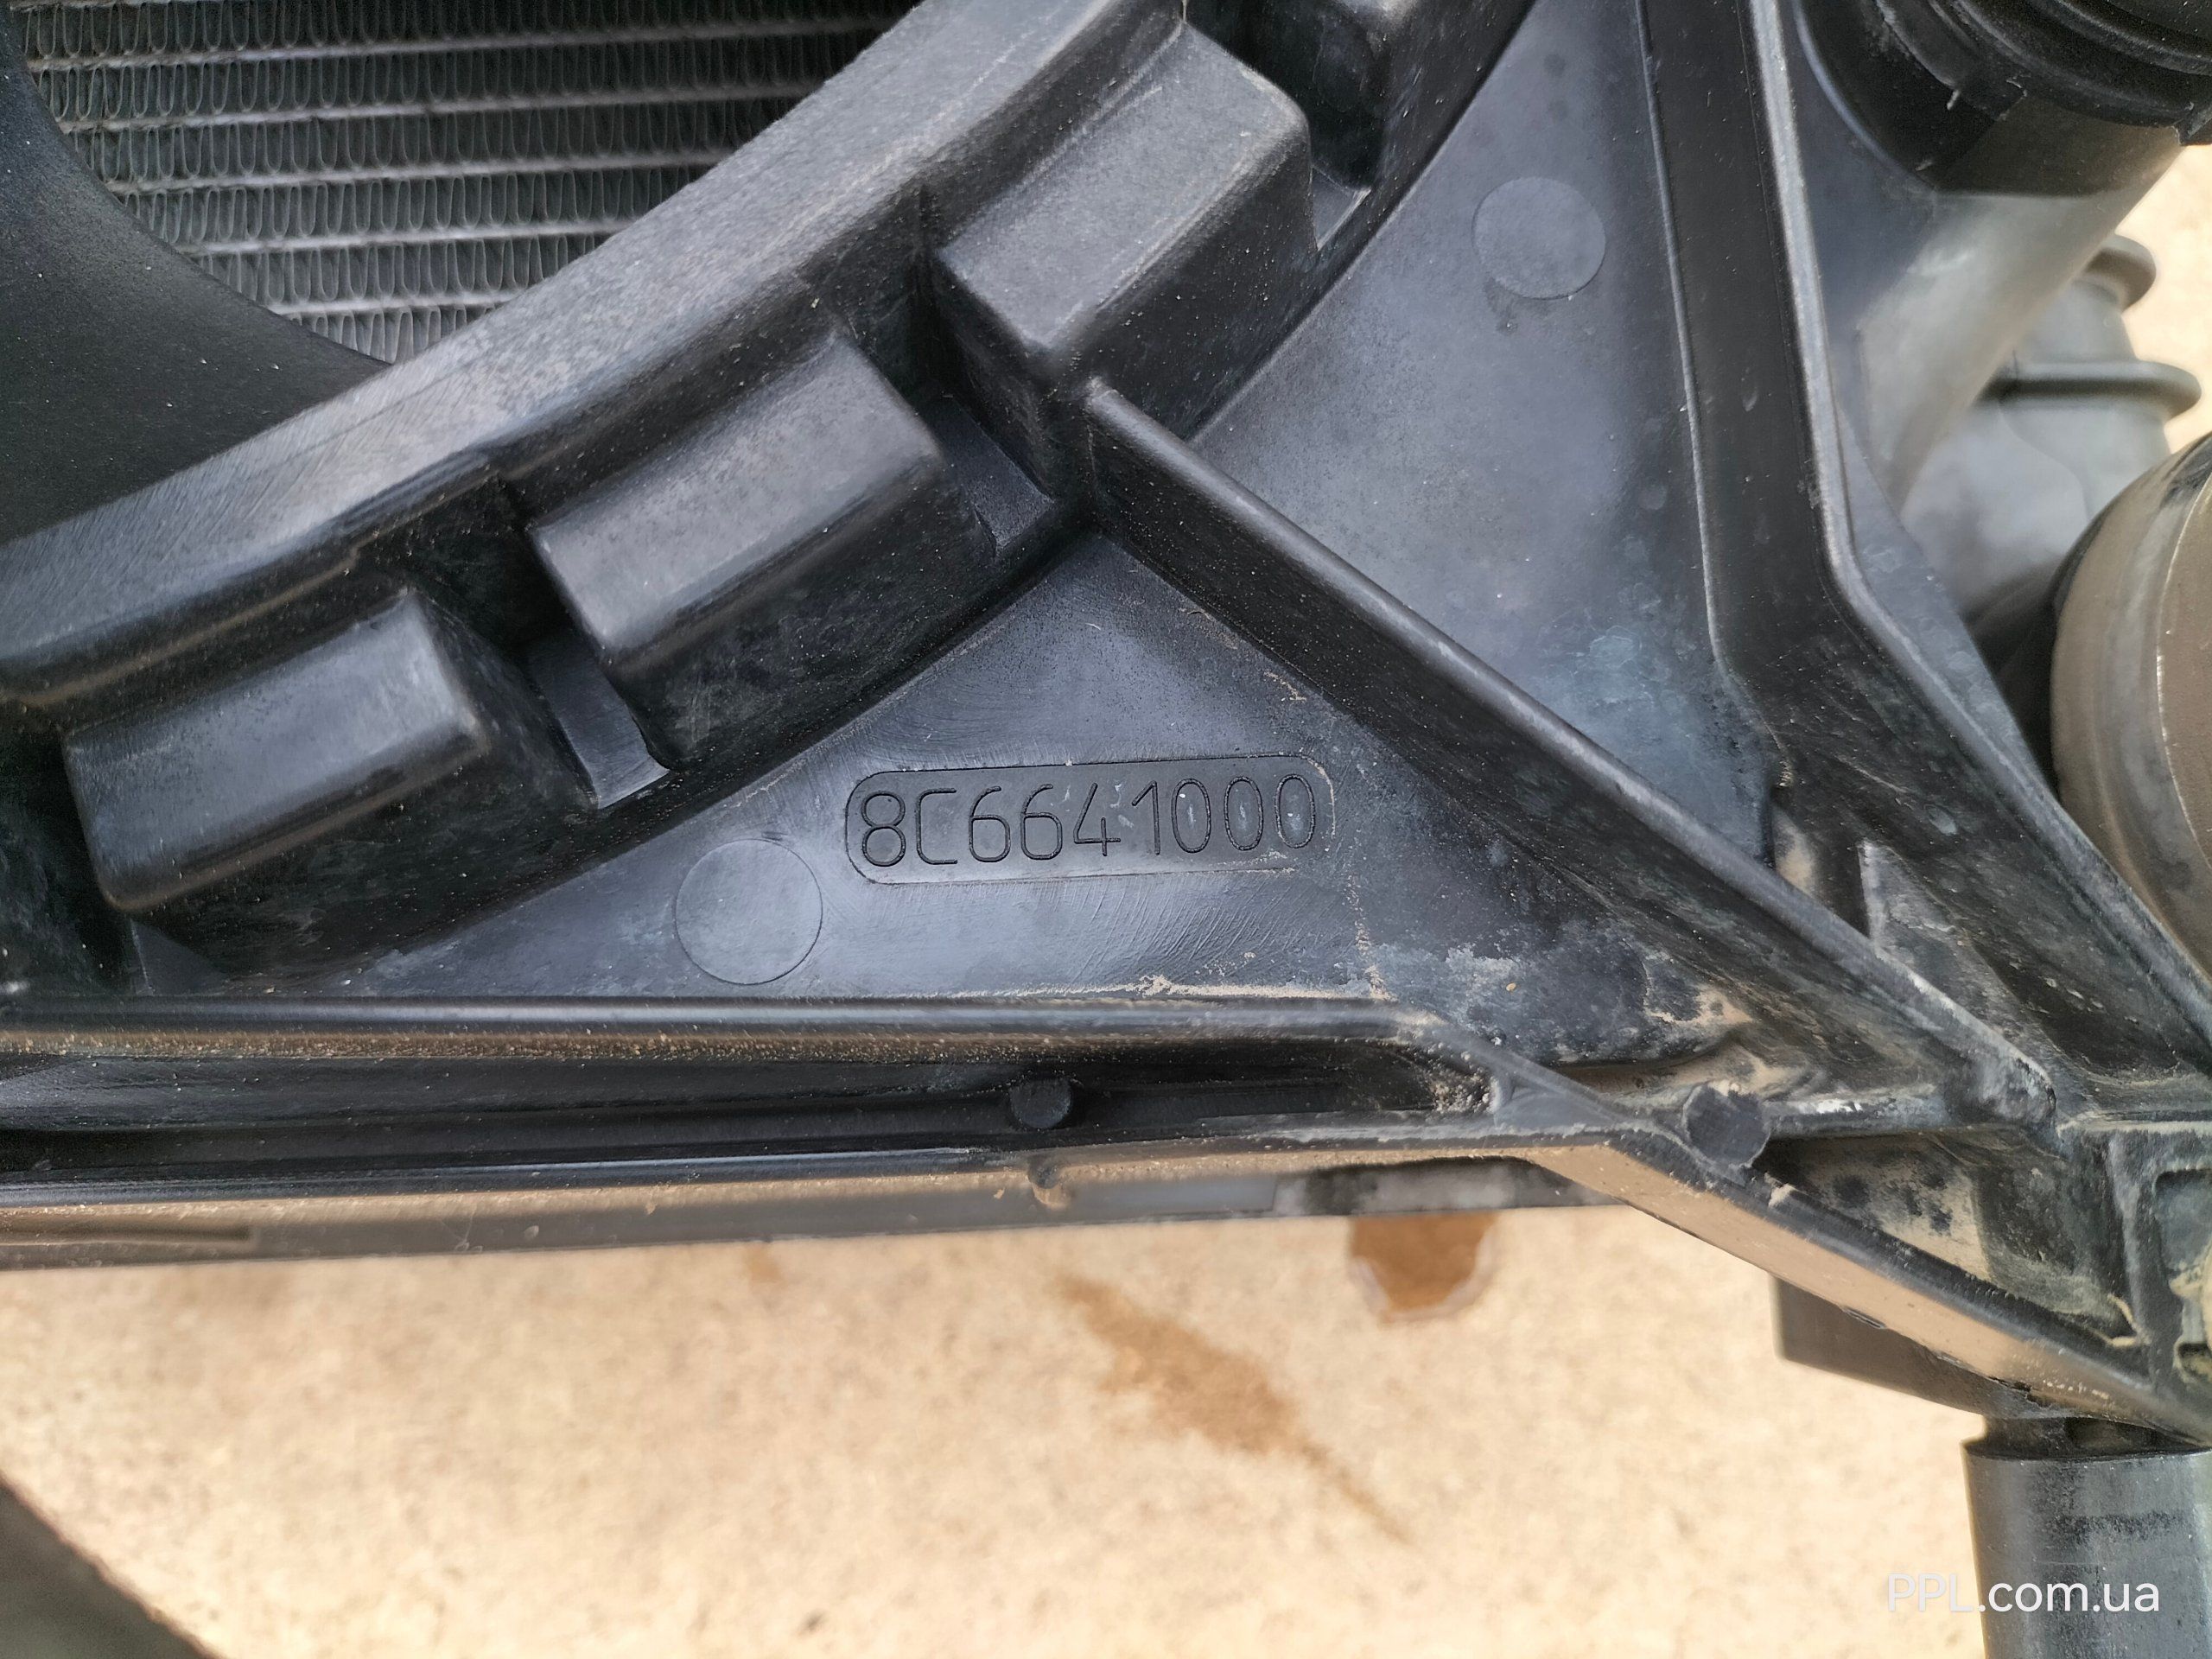 Jeep Renegade 2014- 2.0 D комплект радиаторов диффузор 8C6641000